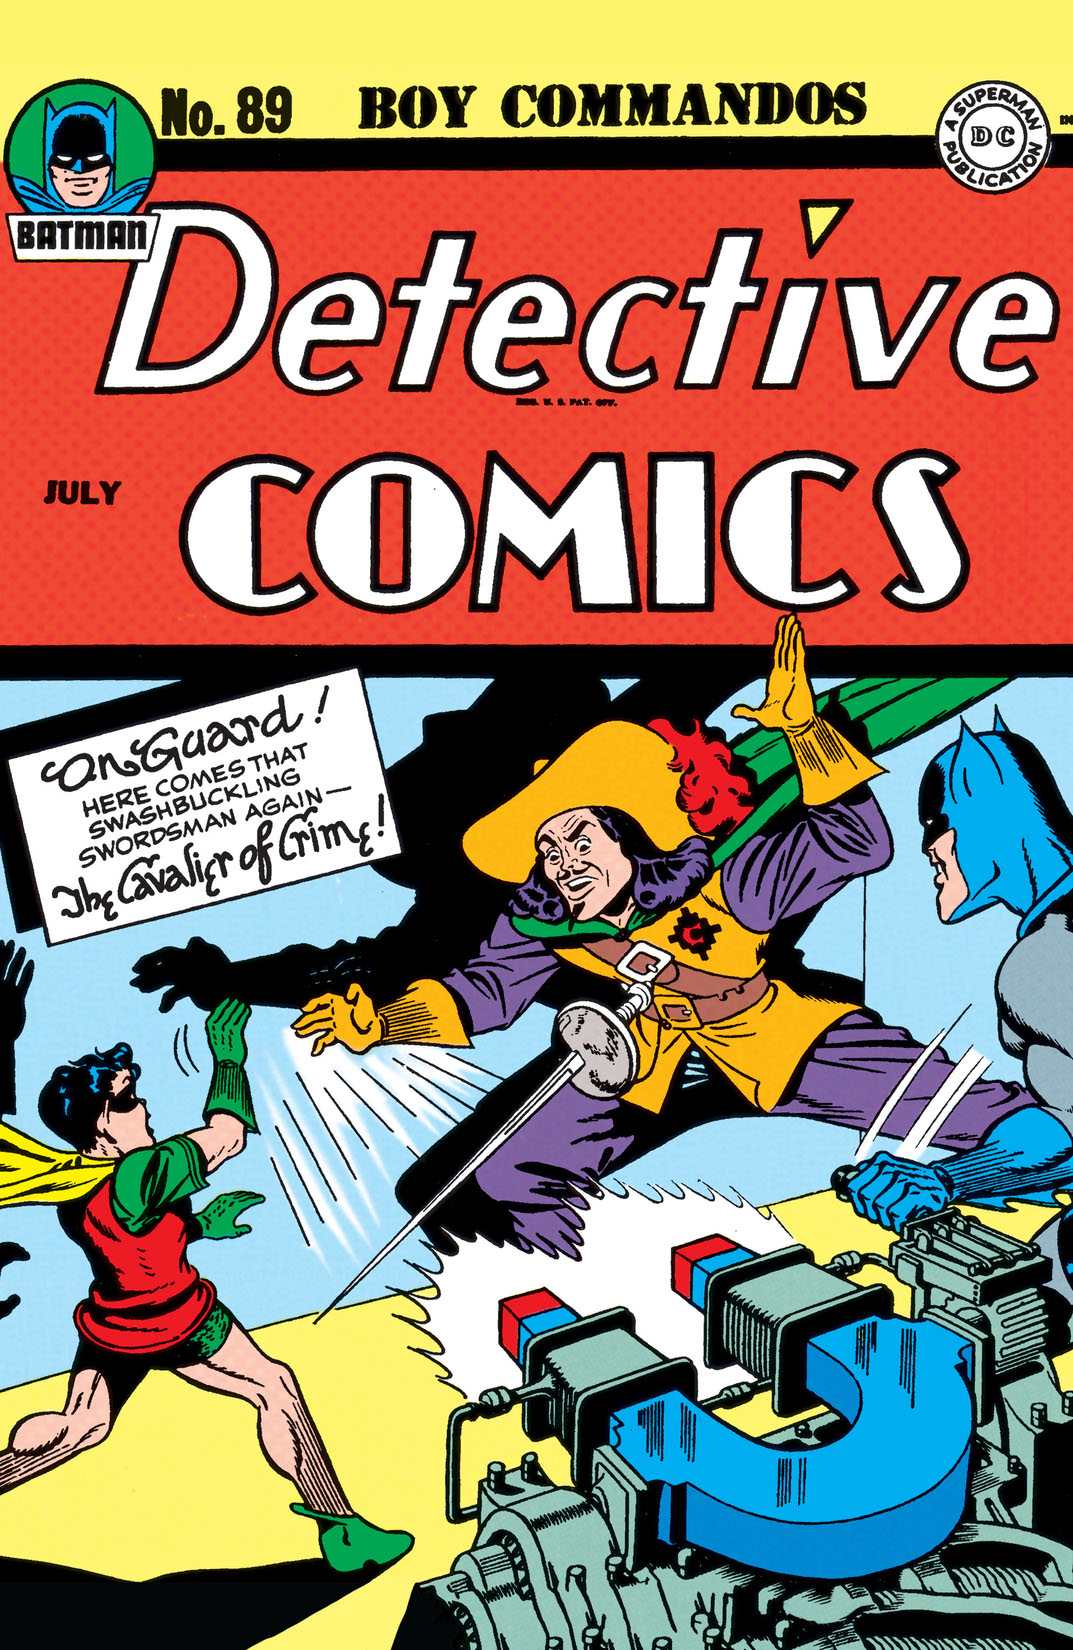 Detective Comics (1937-) #89 preview images